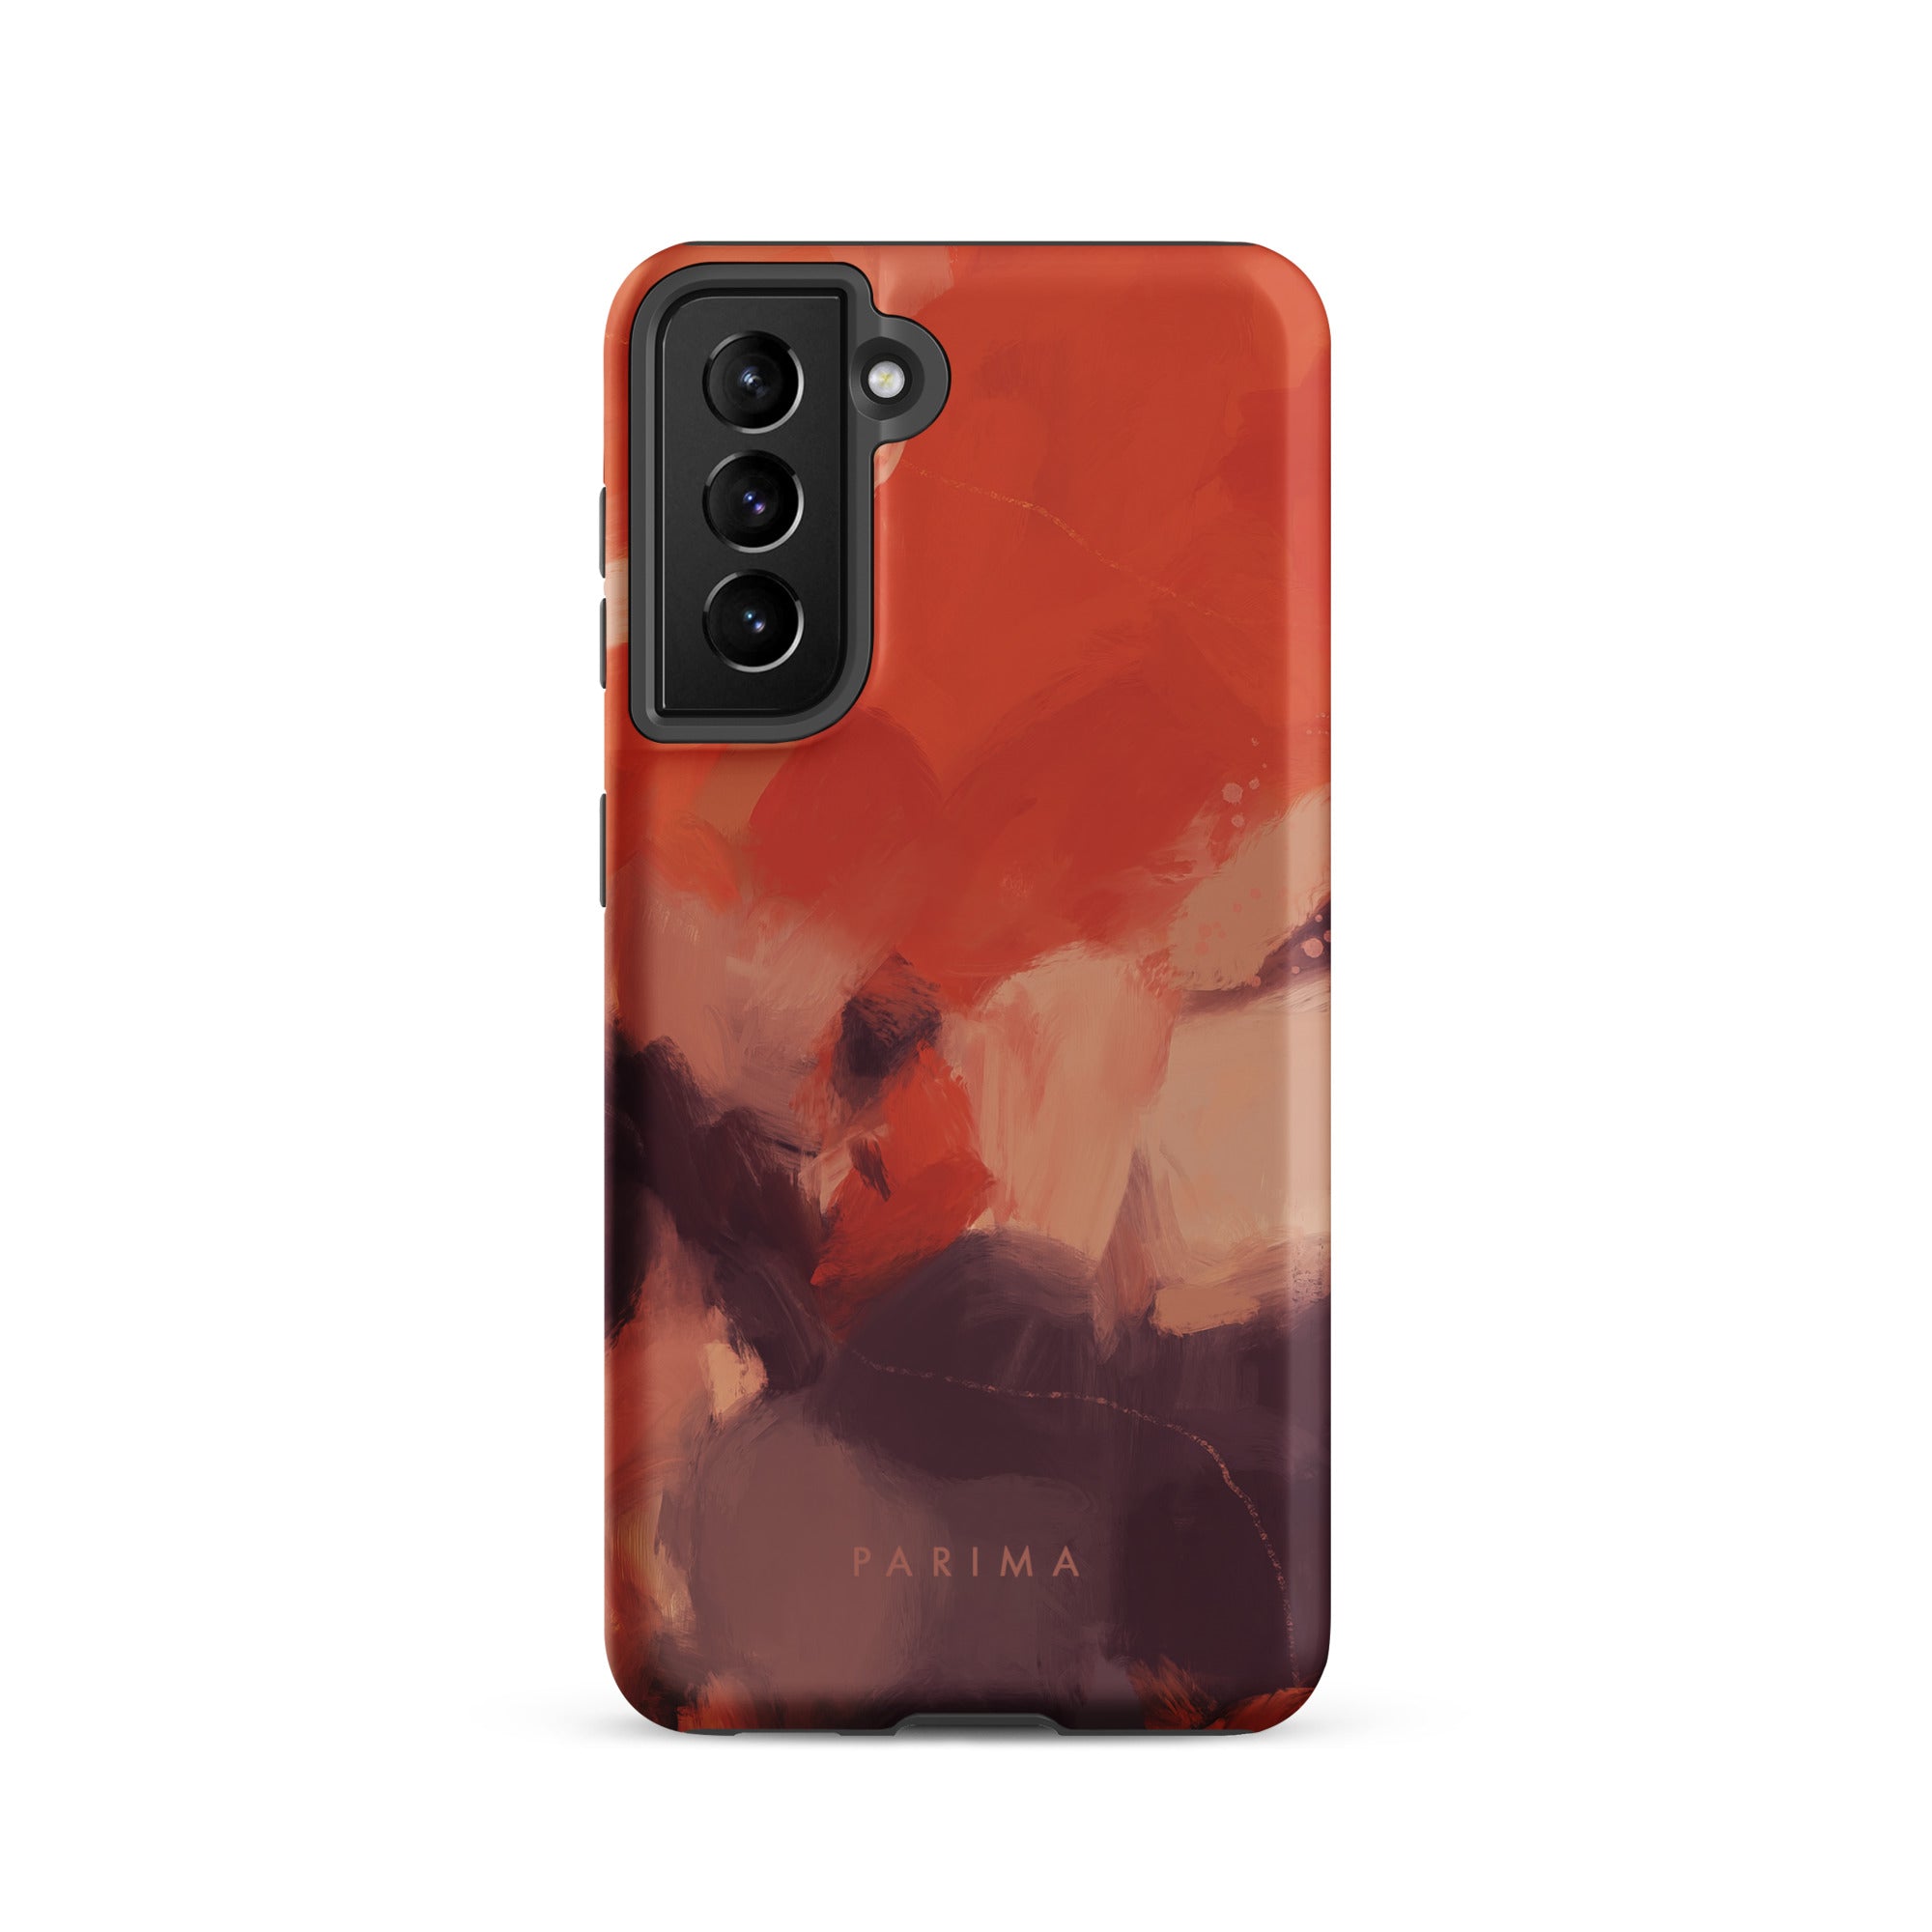 Autumn, orange and purple abstract art on Samsung Galaxy S21 tough case by Parima Studio